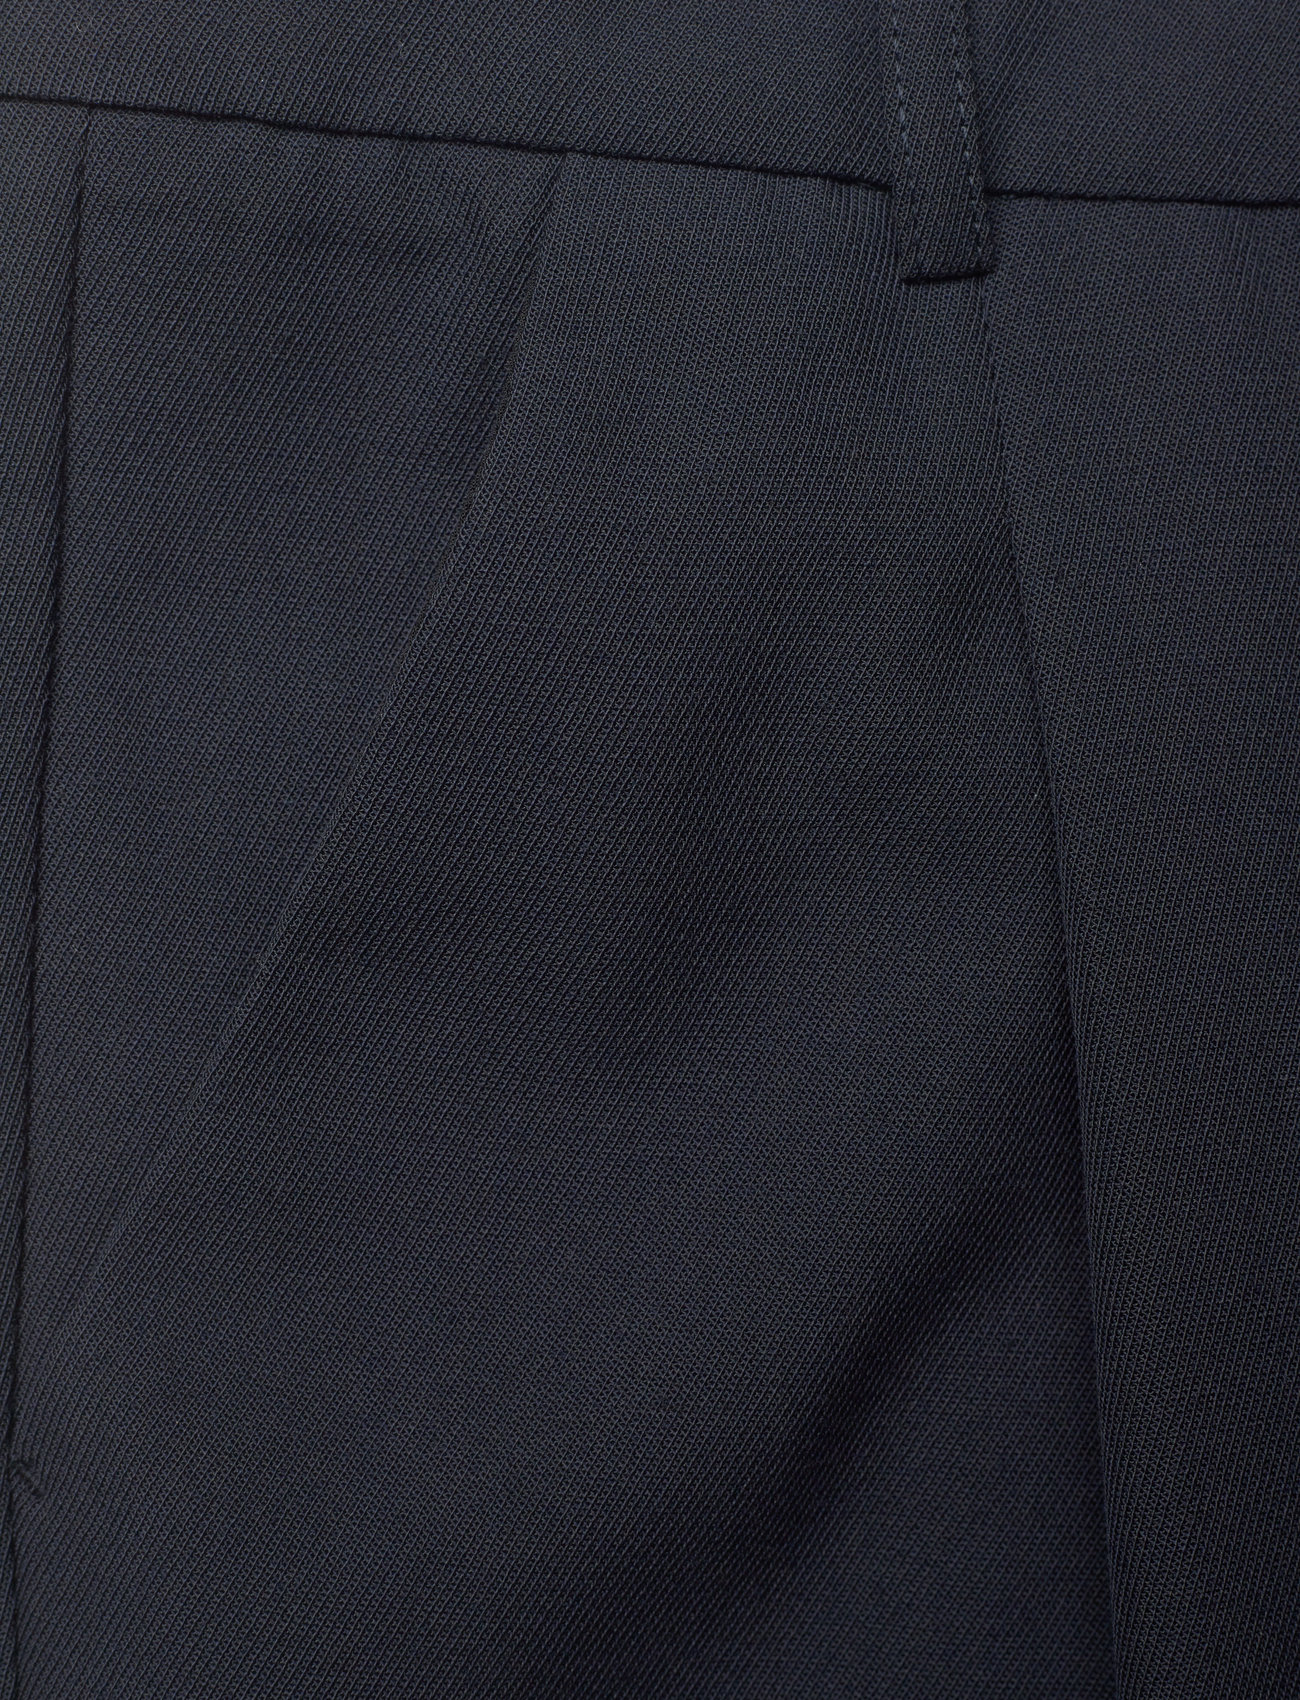 Rabens Saloner - Helen - tailored trousers - navy - 1